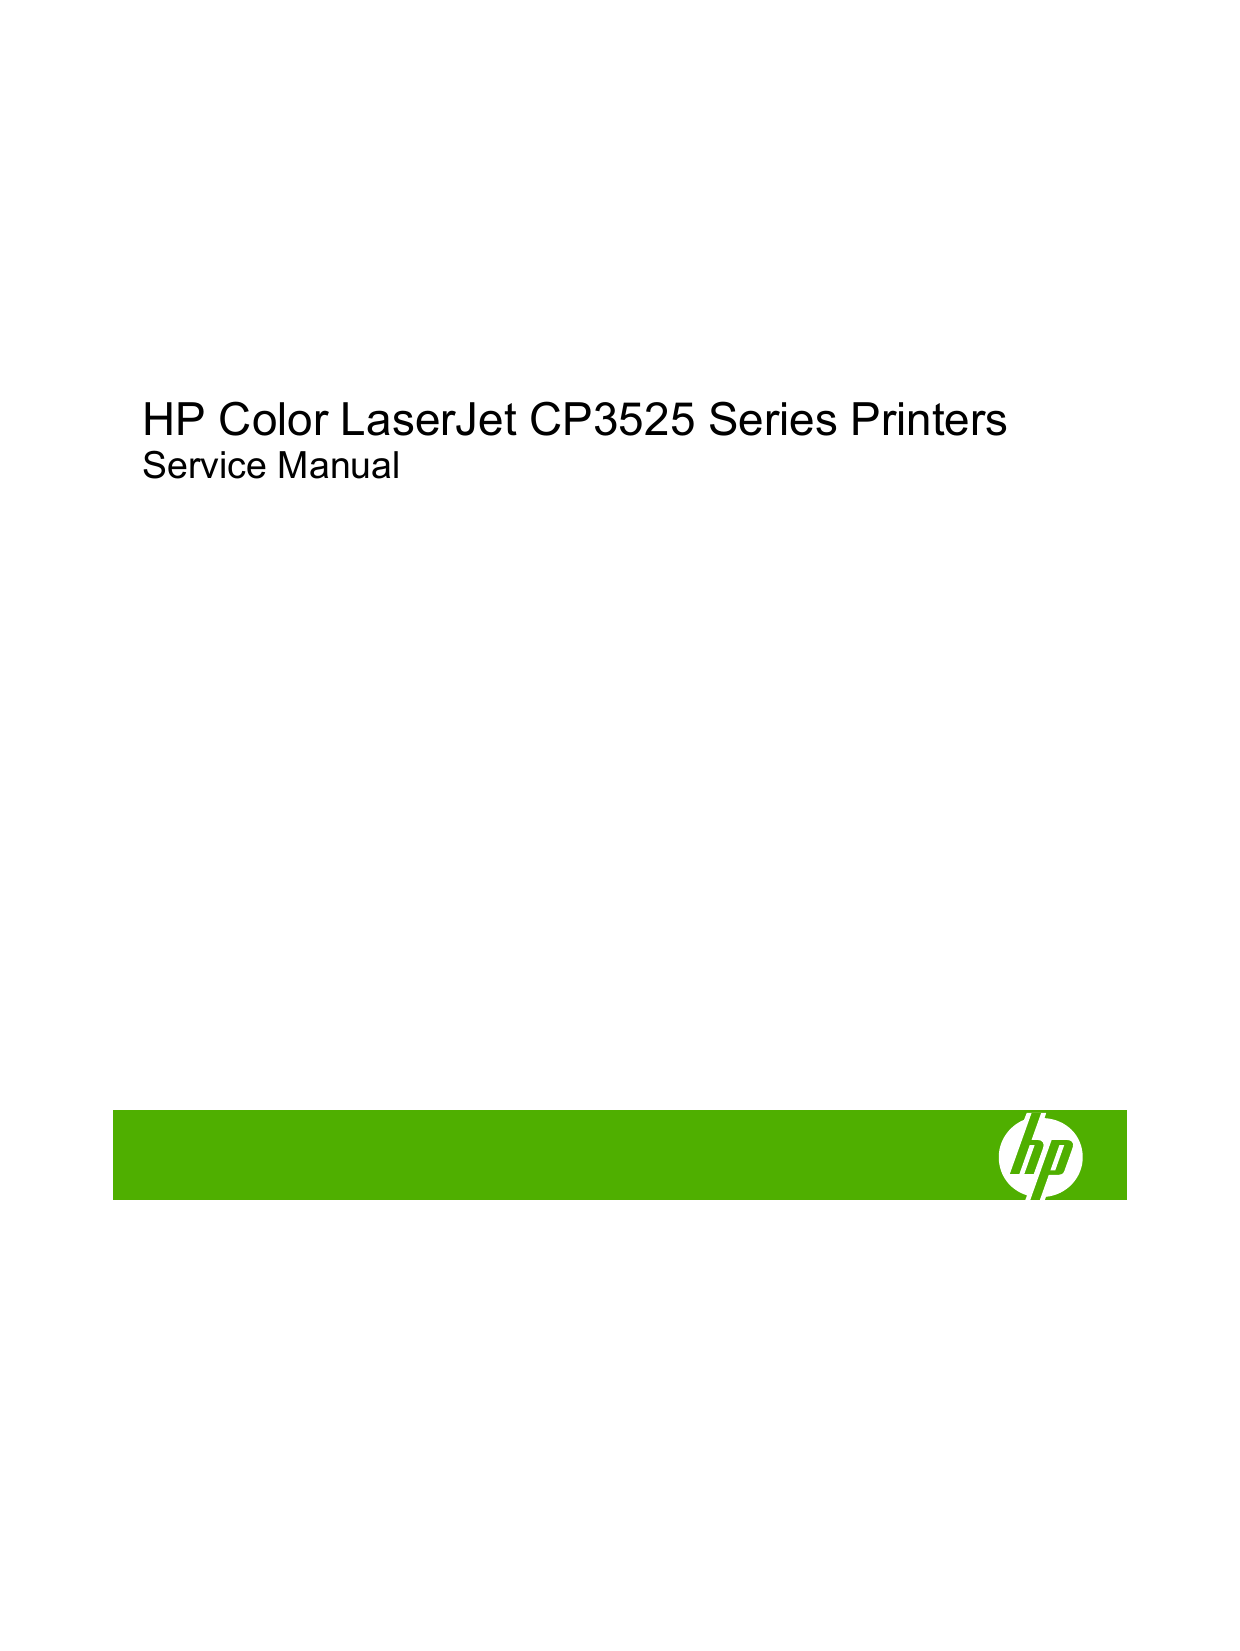 HP Color LaserJet CP3525 color laser printer service manual Preview image 3